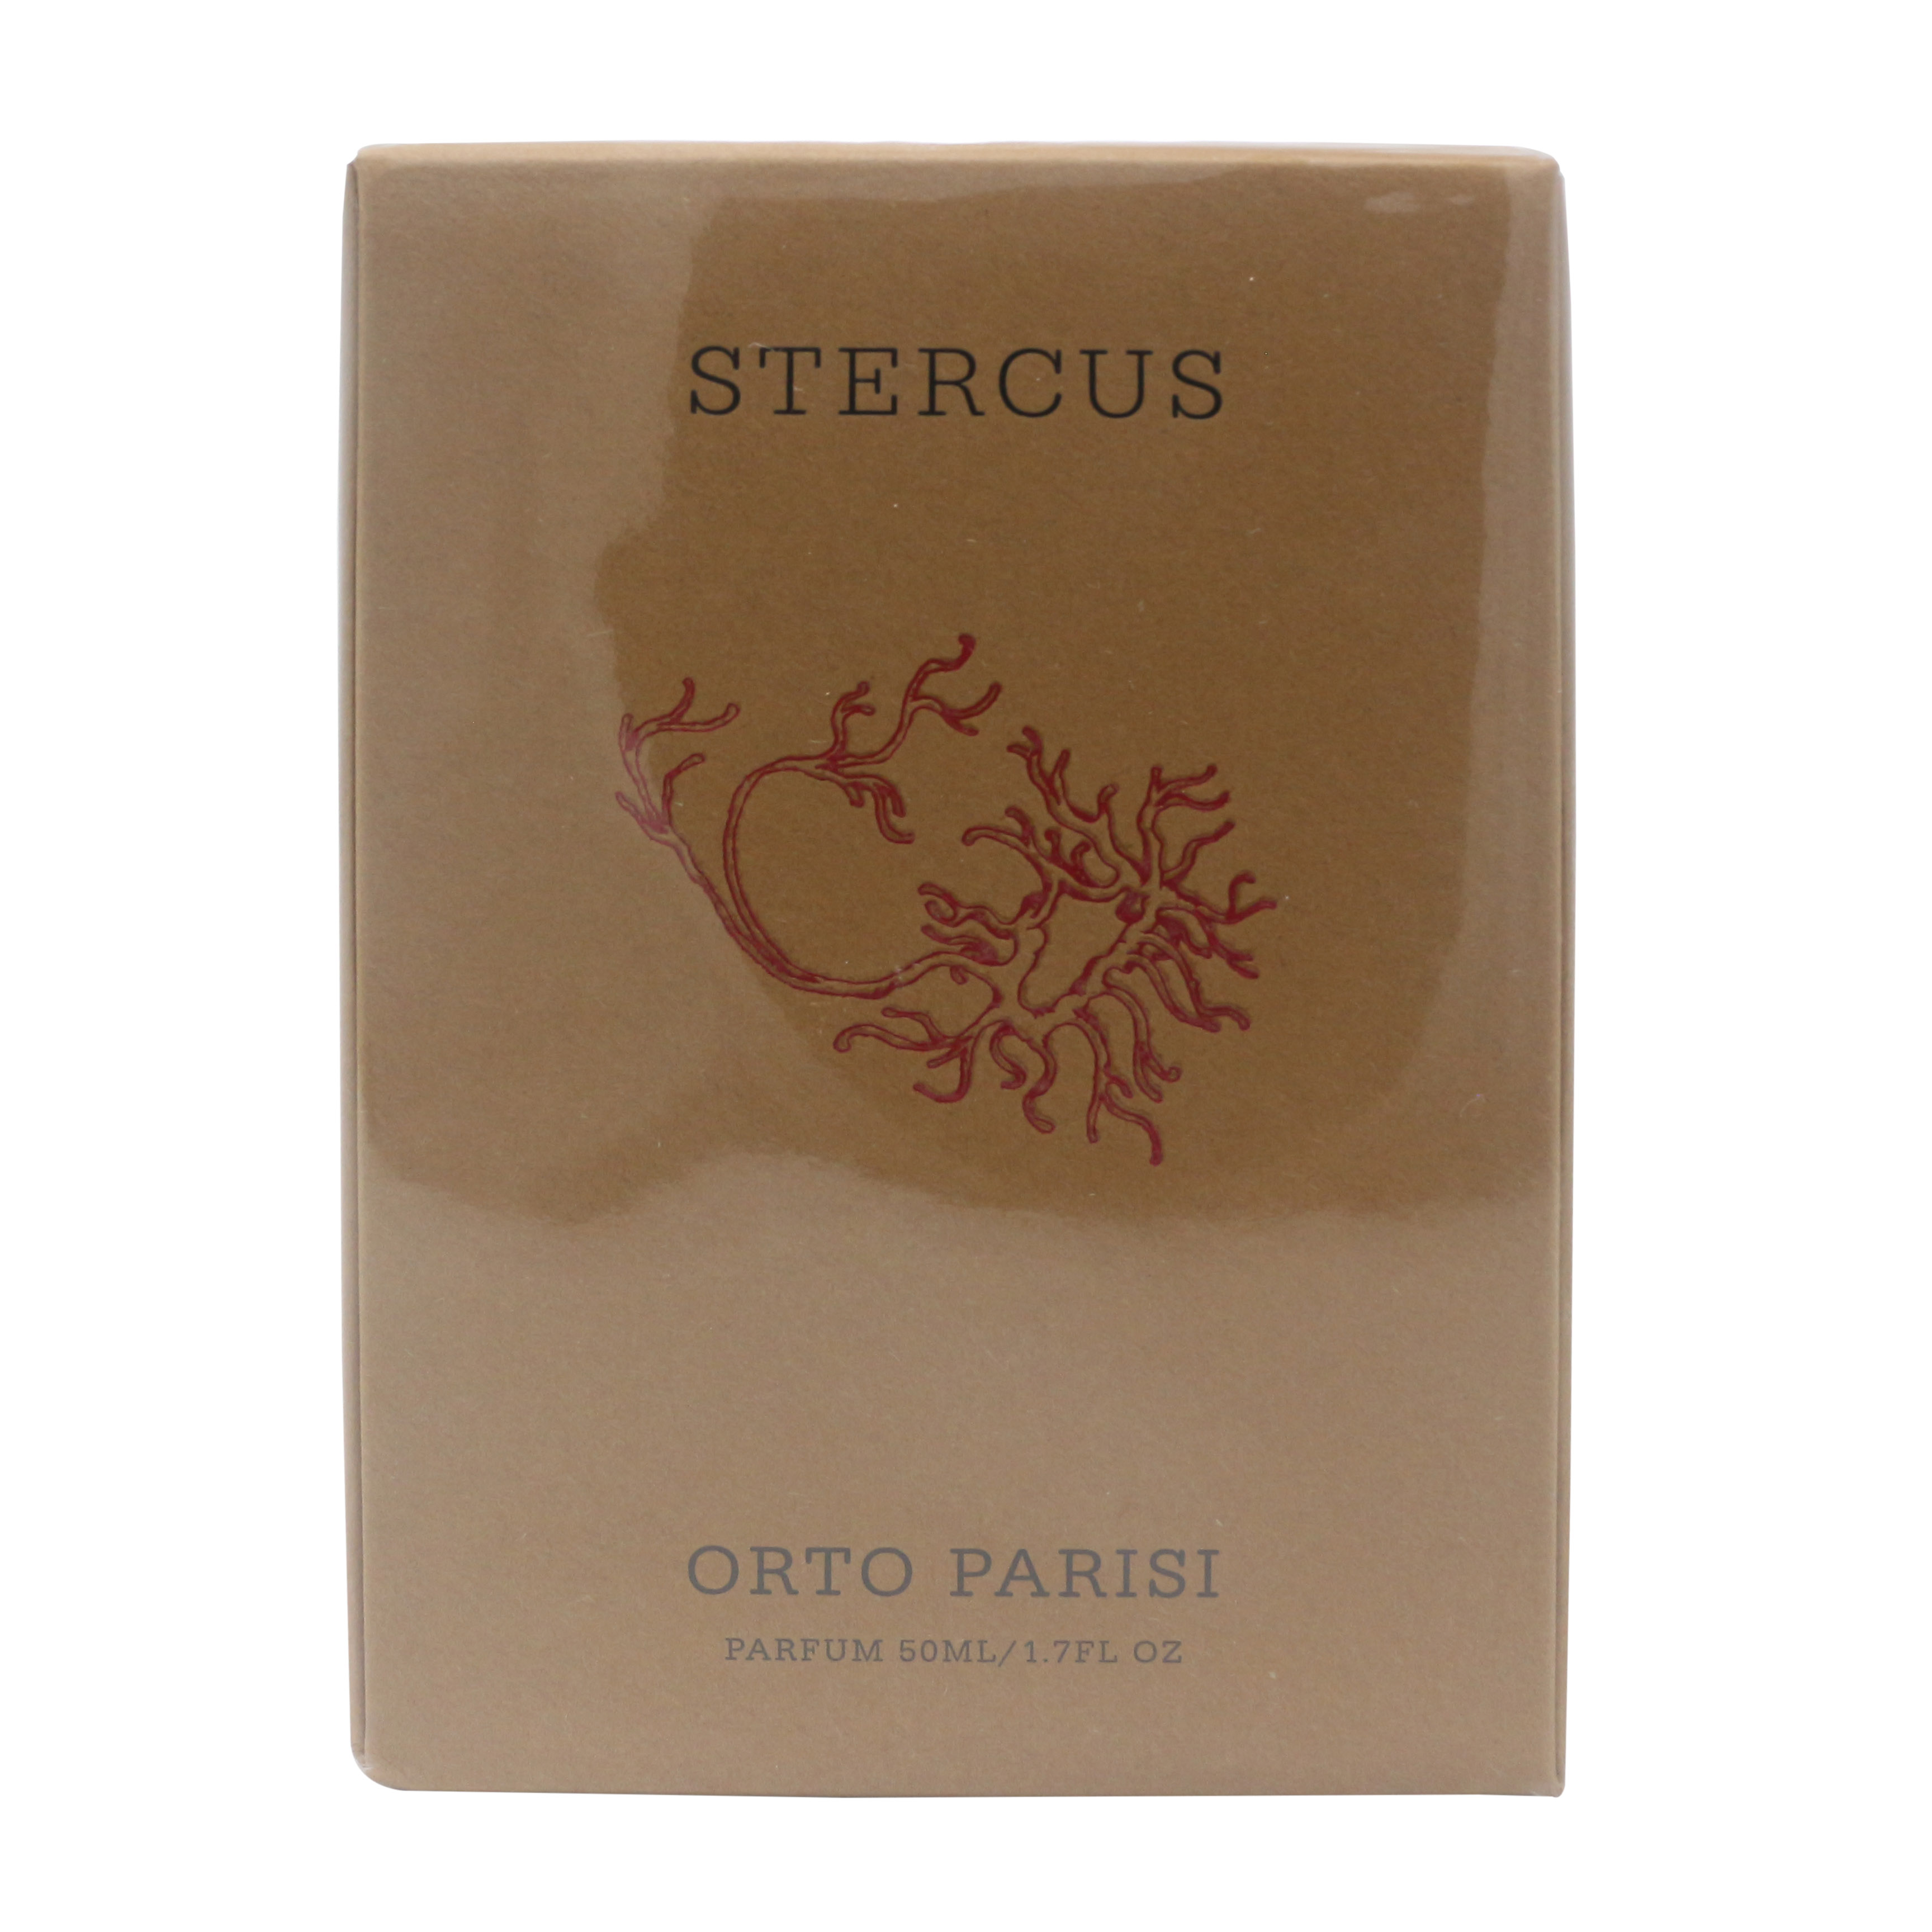 Orto Parisi Stercus – Fragrance Samples UK